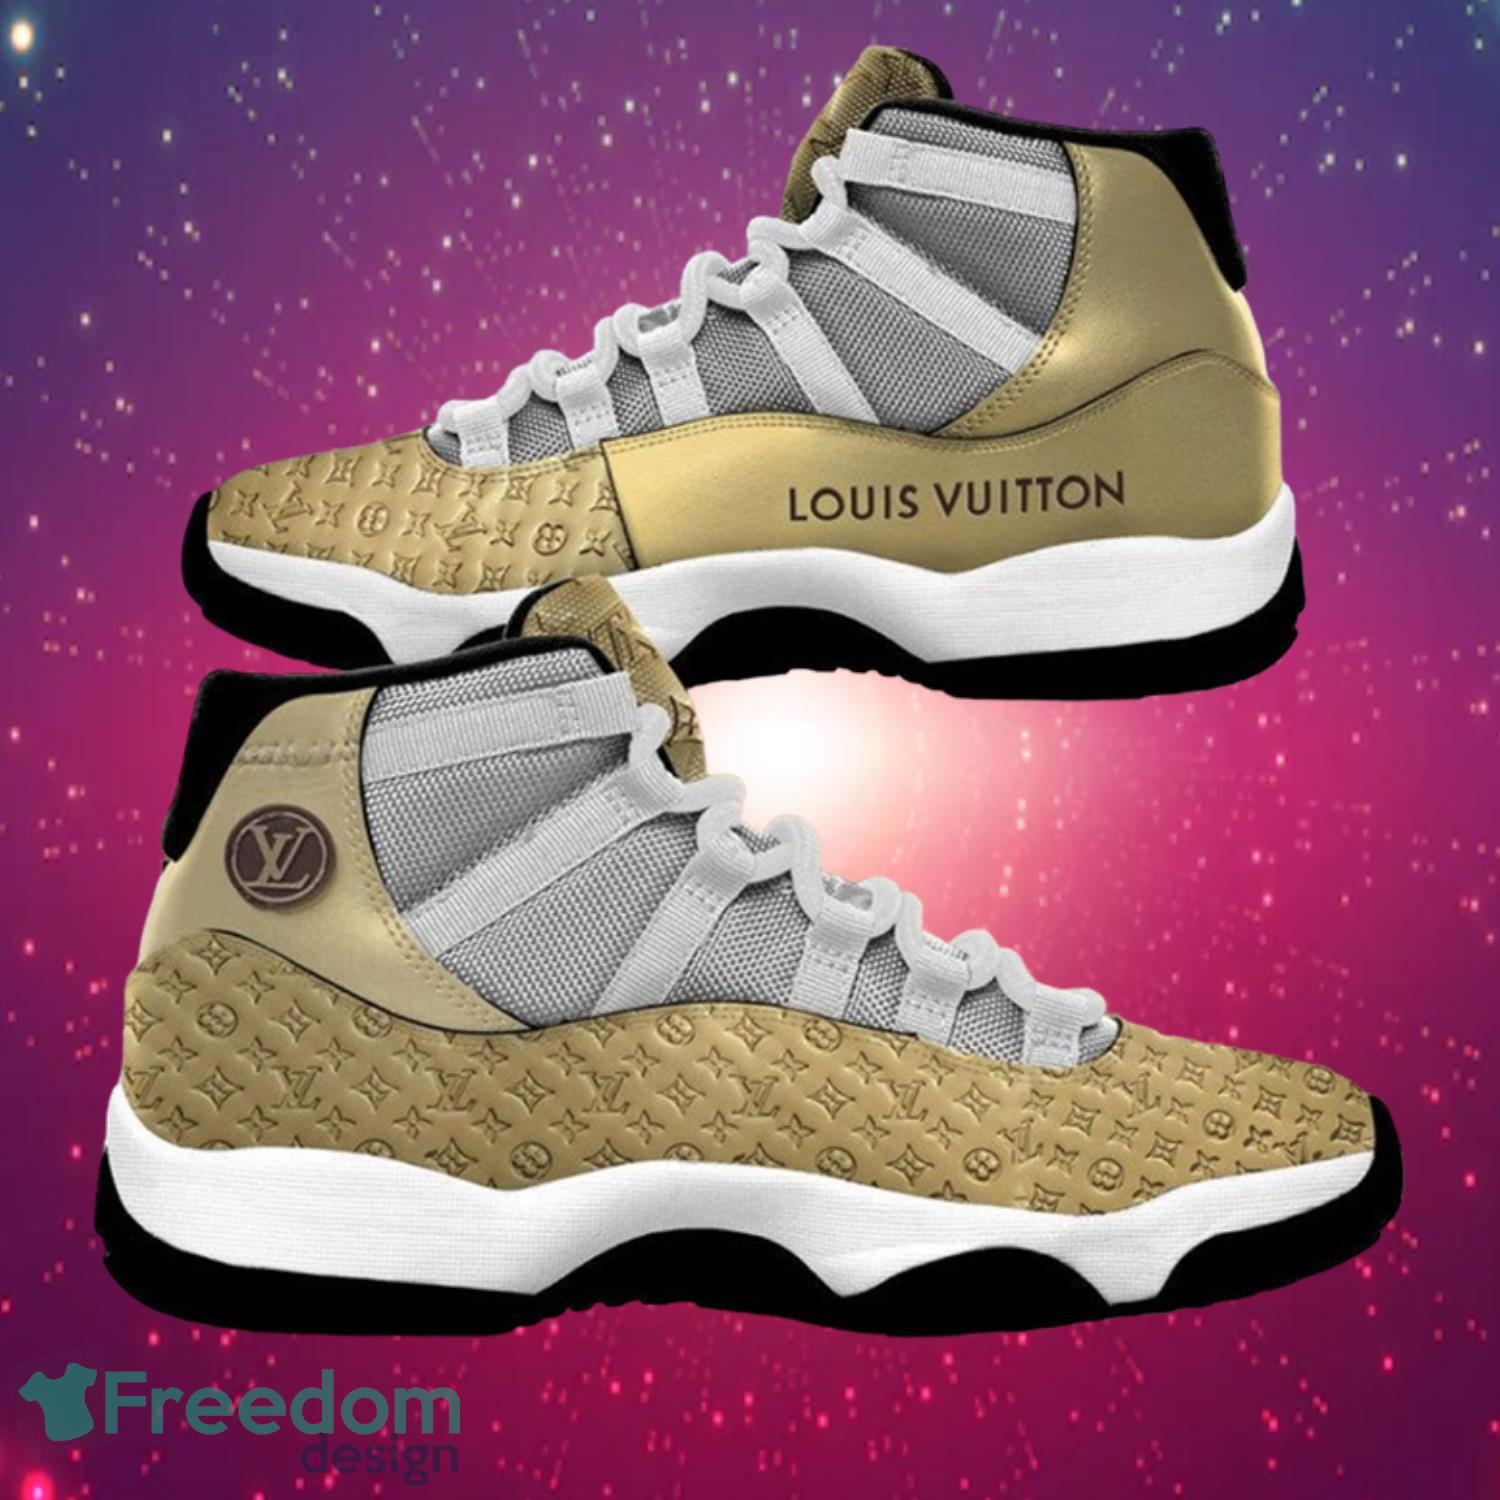 Louis Vuitton Luxury Gold Air Jordan 11 Shoes - Freedomdesign